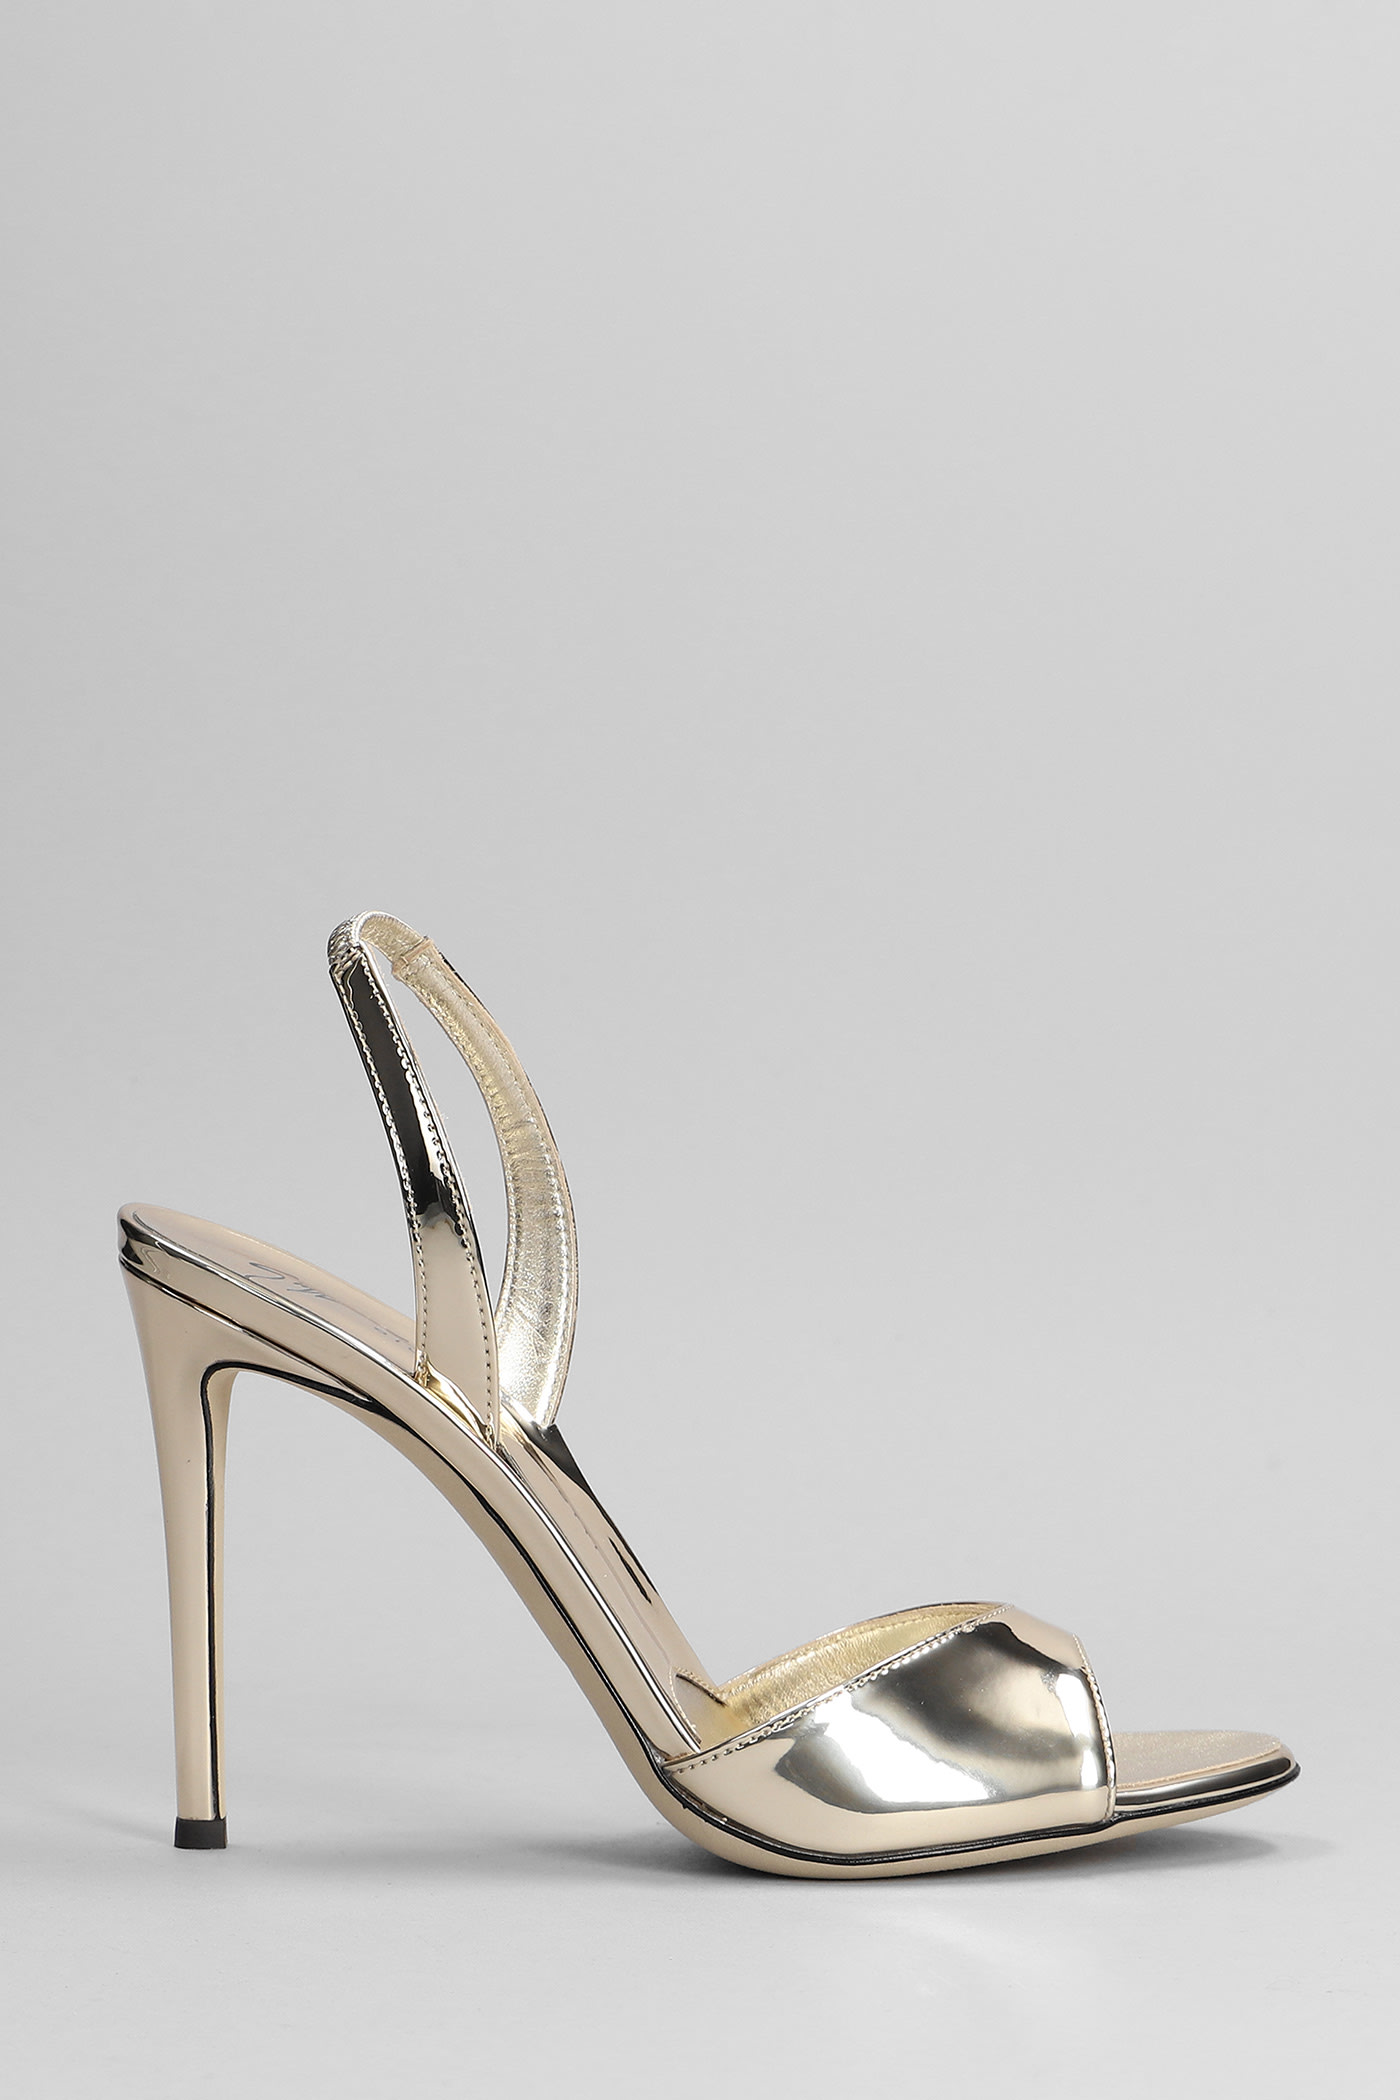 Giuseppe Zanotti Sandals In Platinum Leather